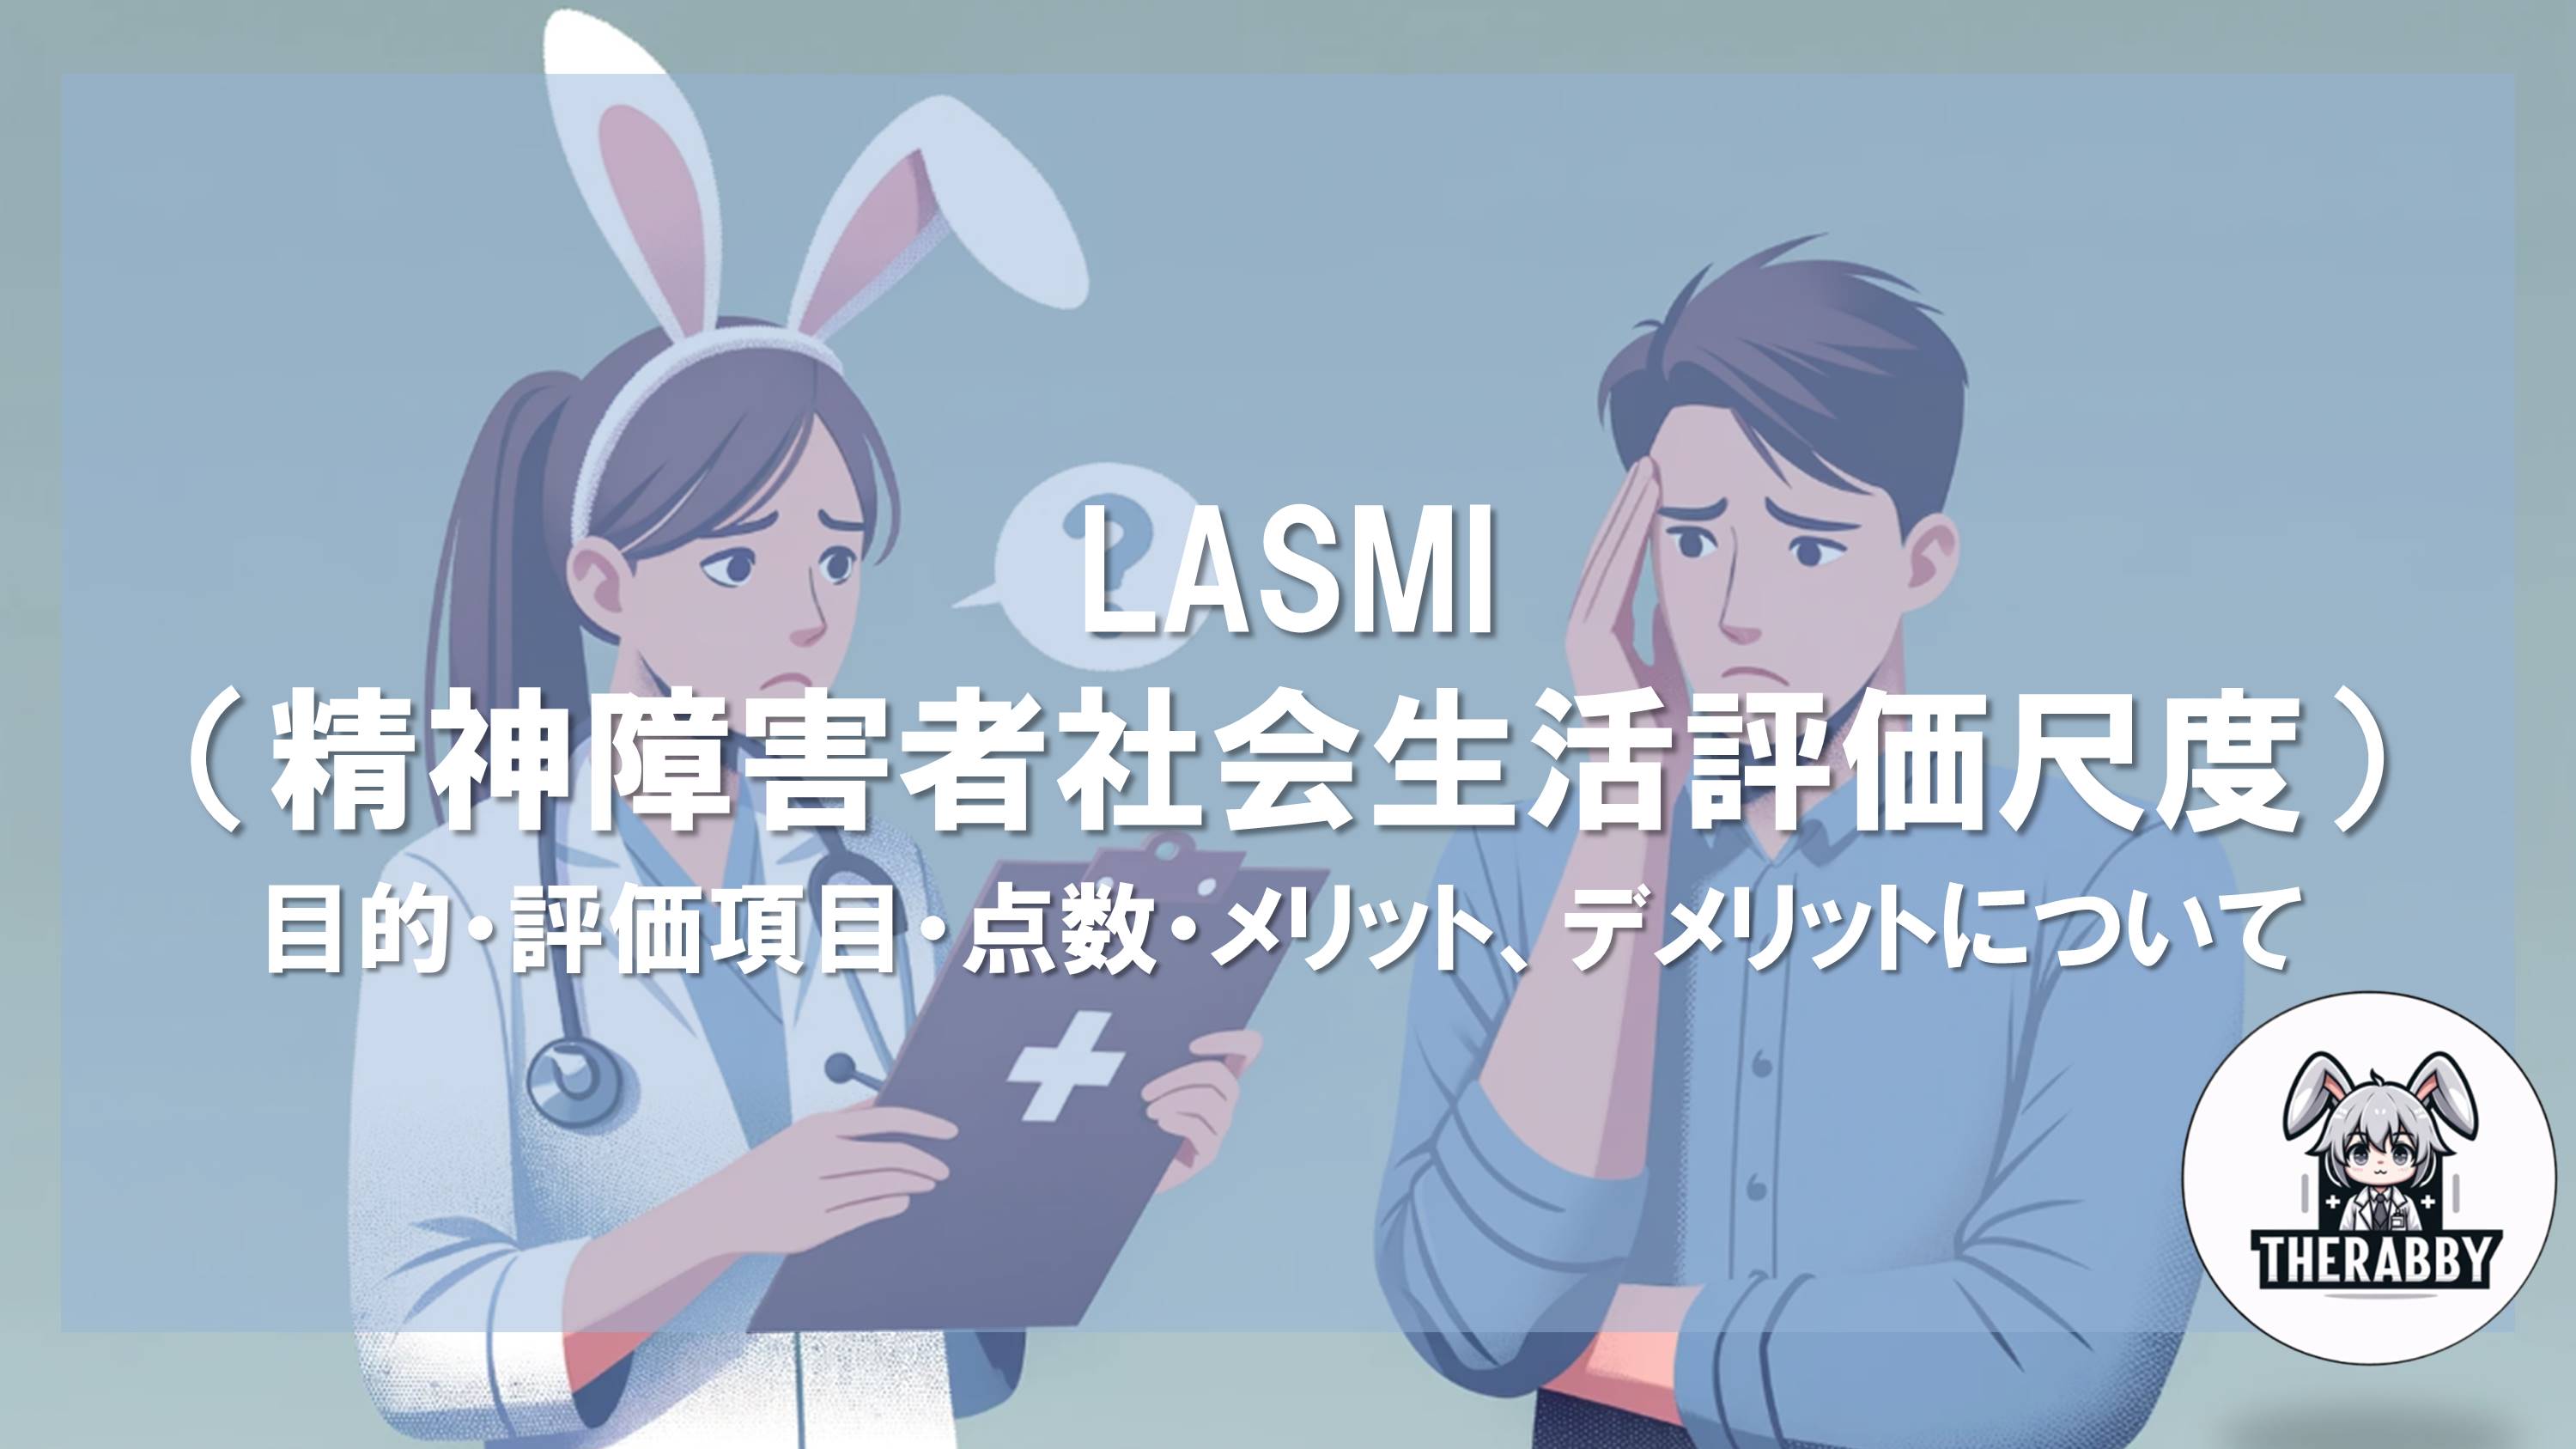 LASMI（精神障害者社会生活評価尺度）- 目的・評価項目・点数・メリット、デメリットについて